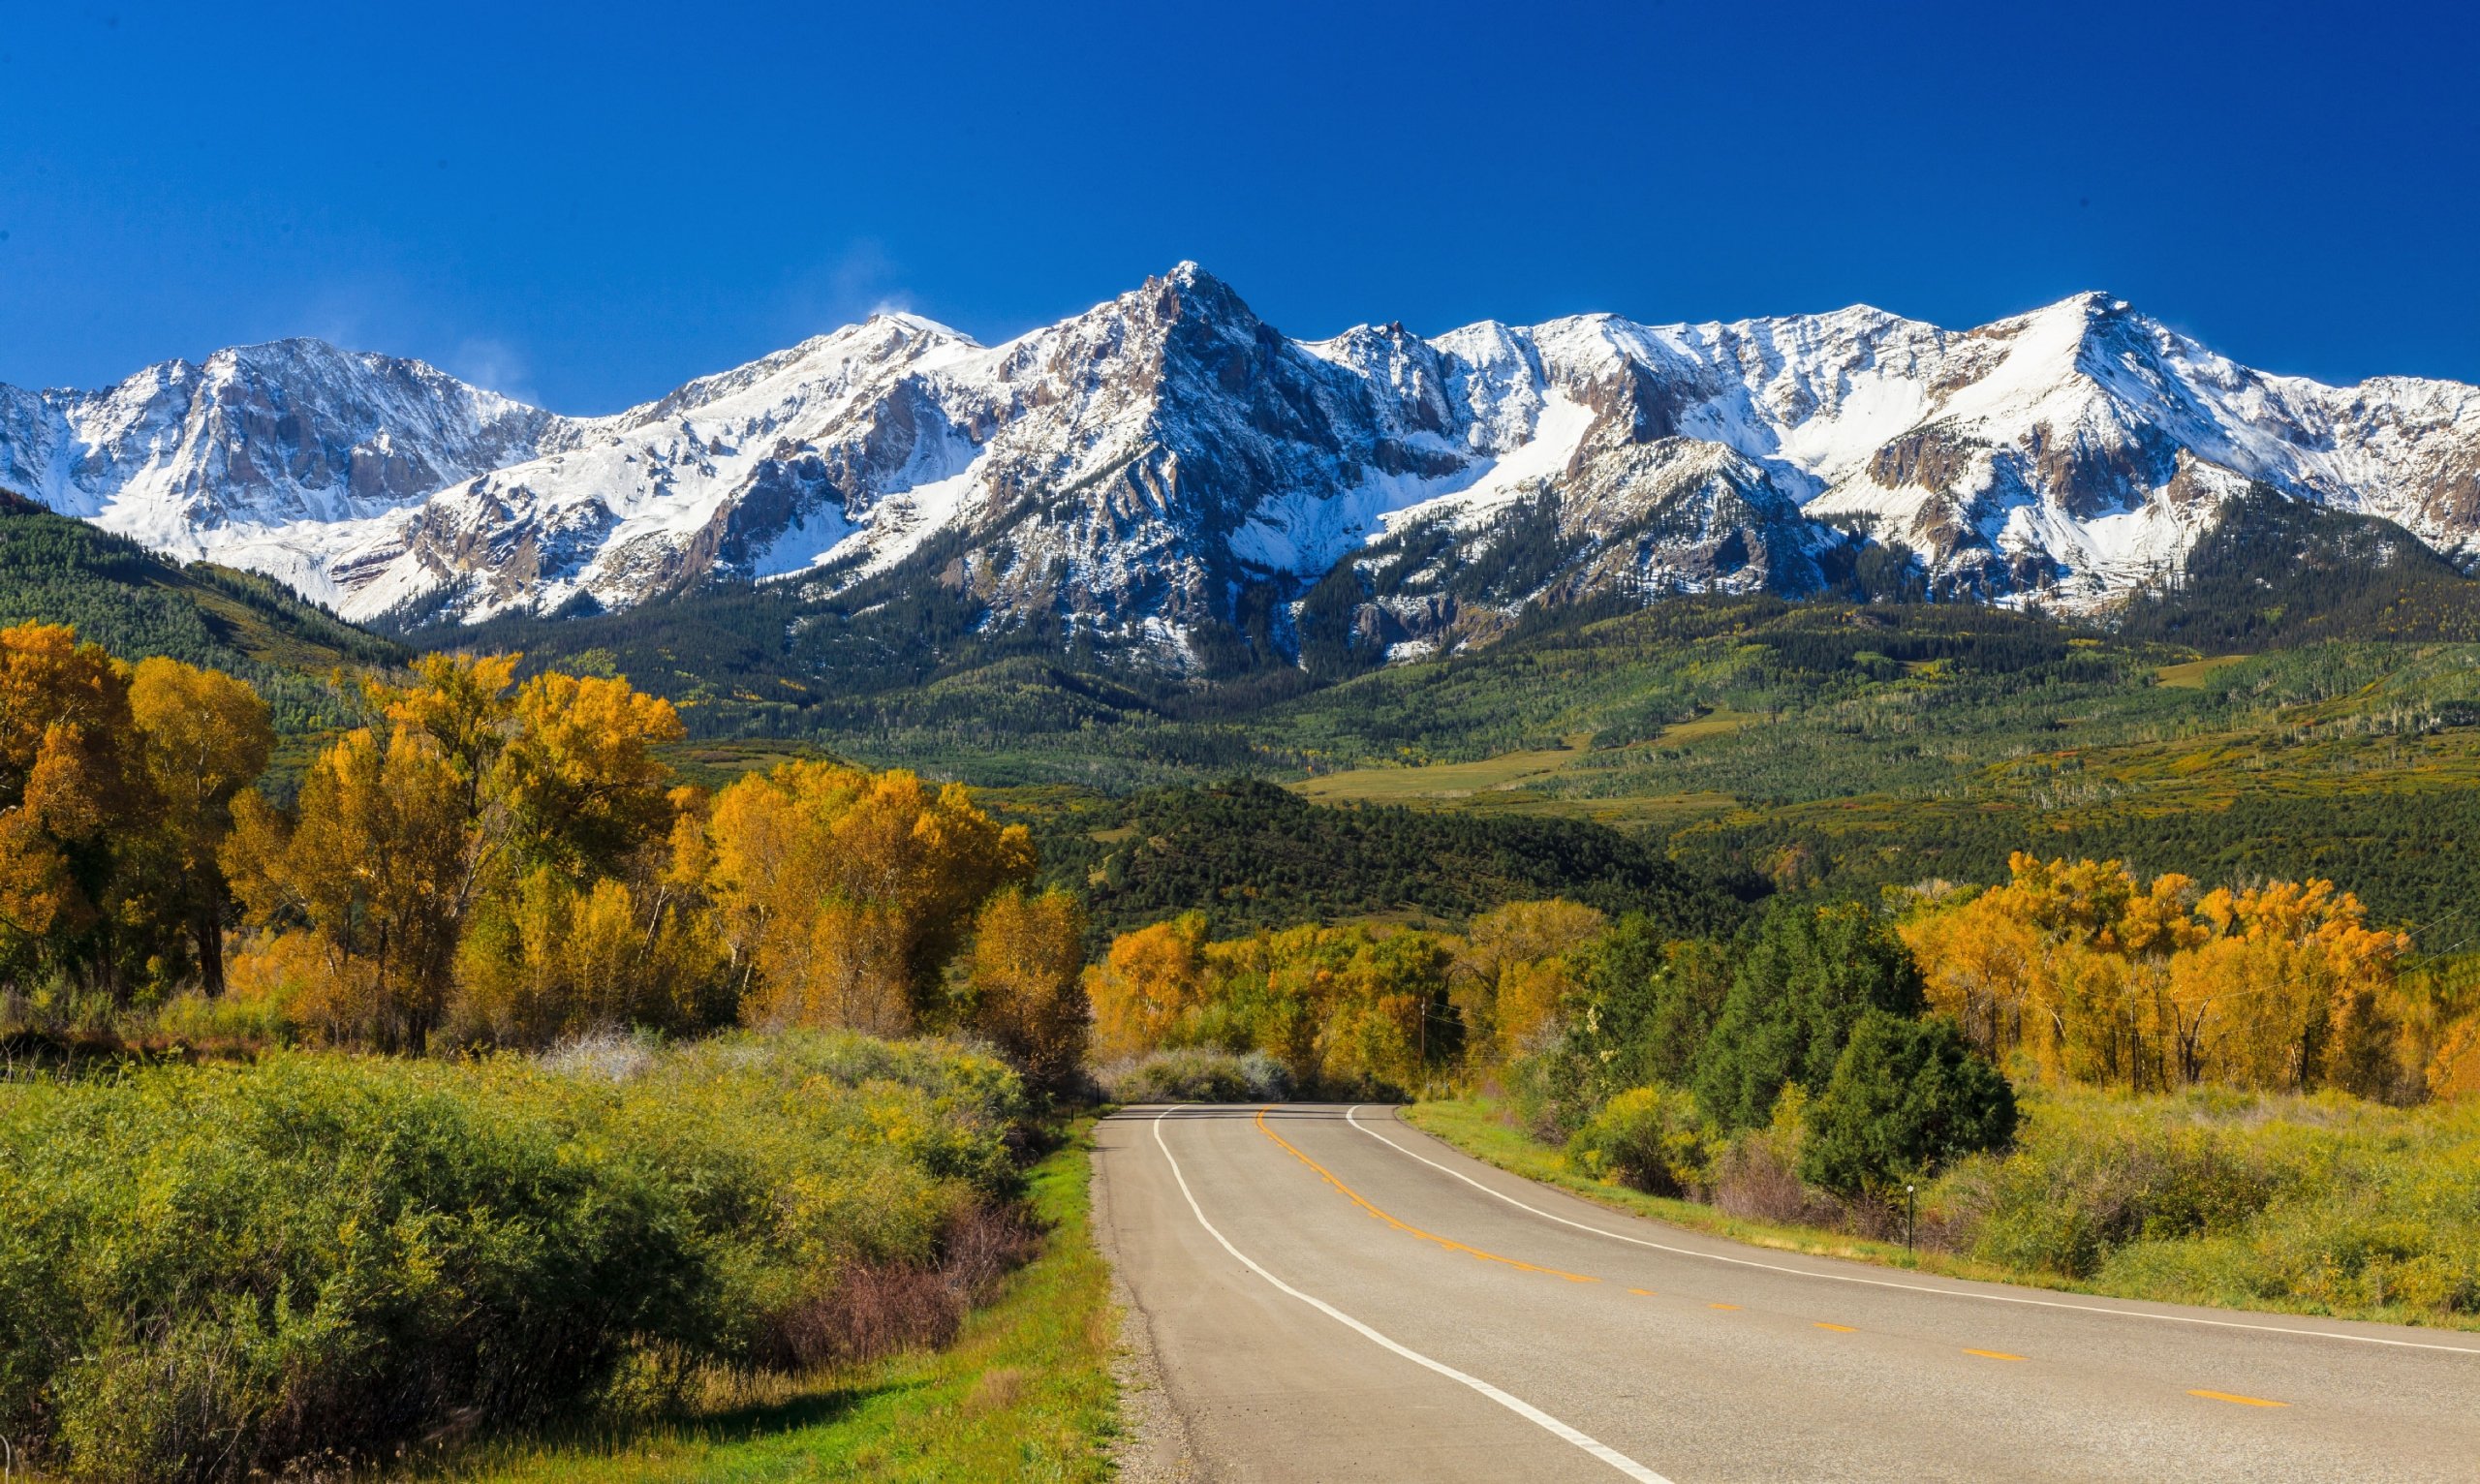 Colorado: Aspen to Vail, Valleys of the Rockies
